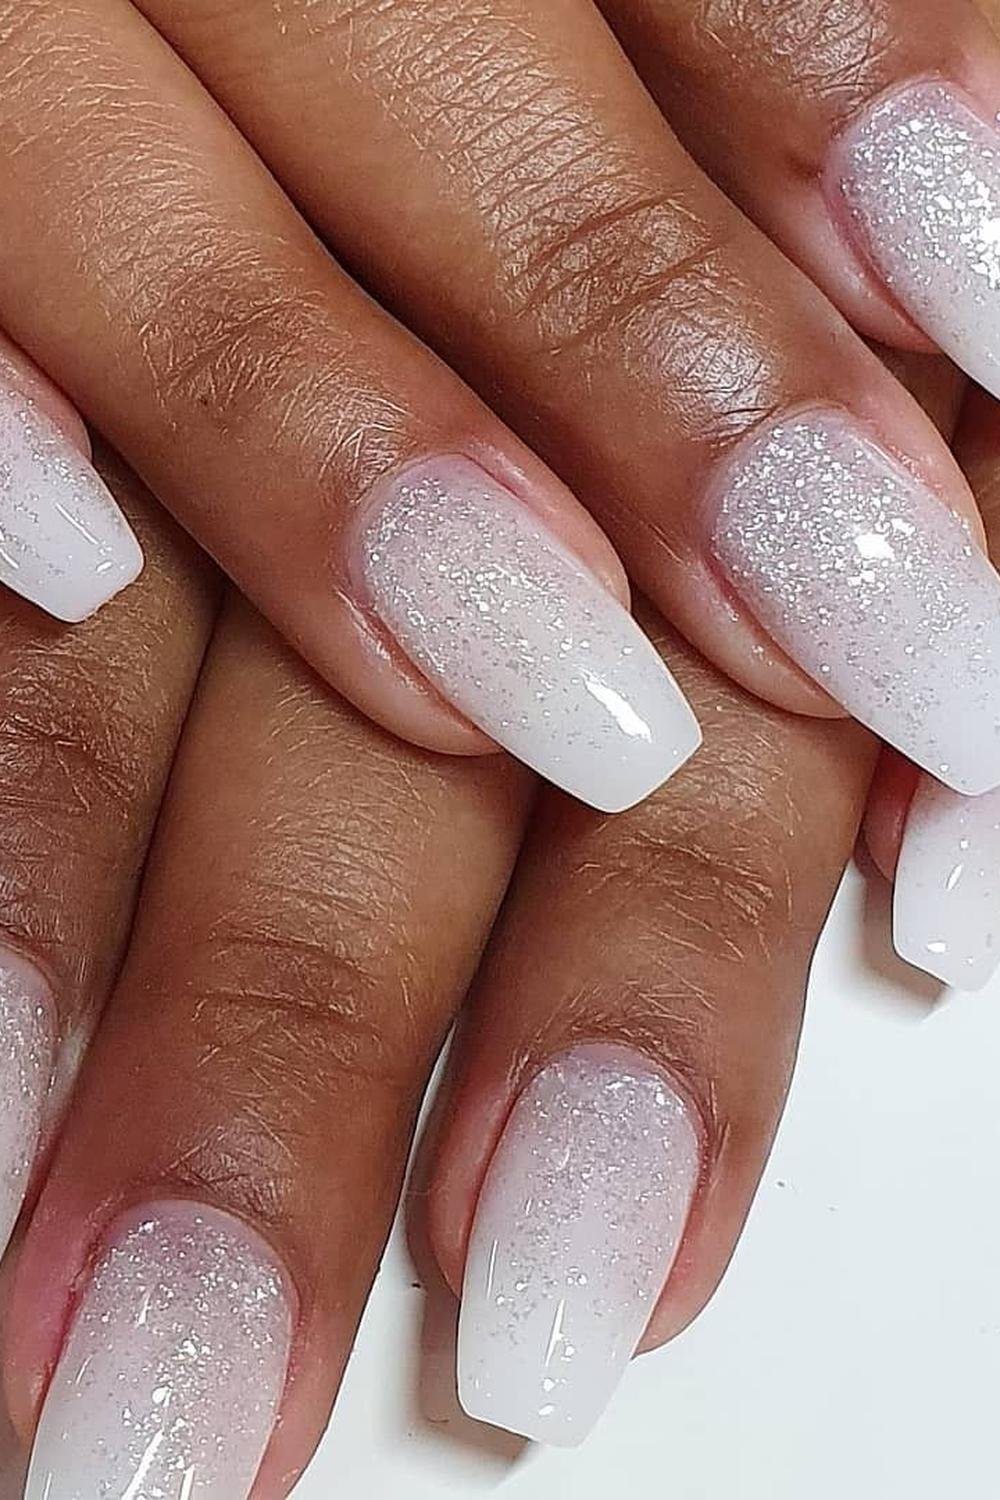 10 - Picture of White Glitter Nails